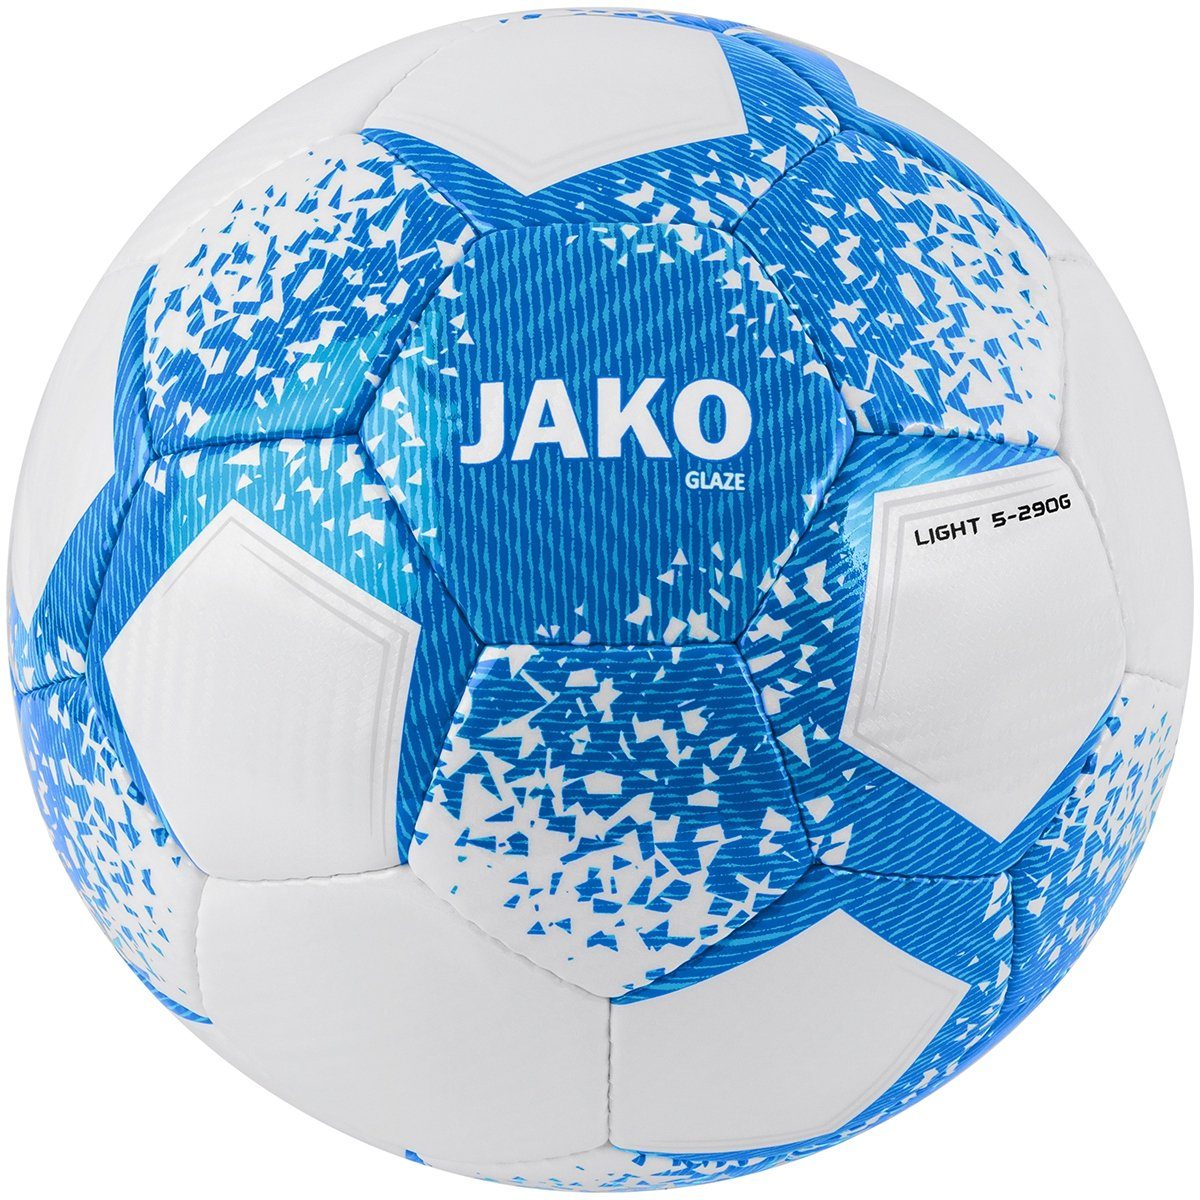 Jako Fußball weiß/JAKO blau/ lightblue-290g